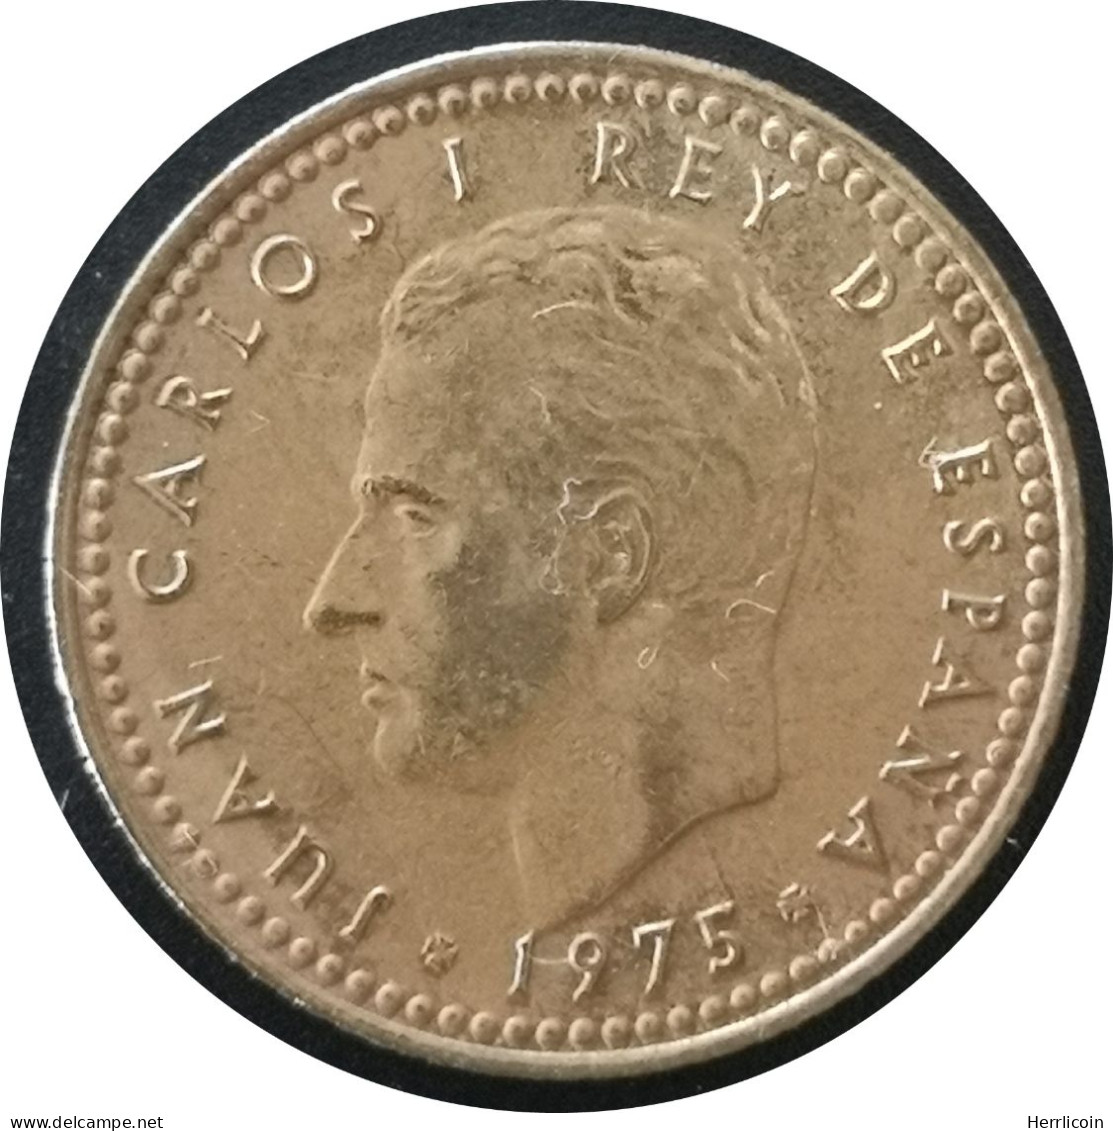 Monnaie Espagne - 1975 (1978) - 1 Peseta Juan Carlos I - 1 Peseta